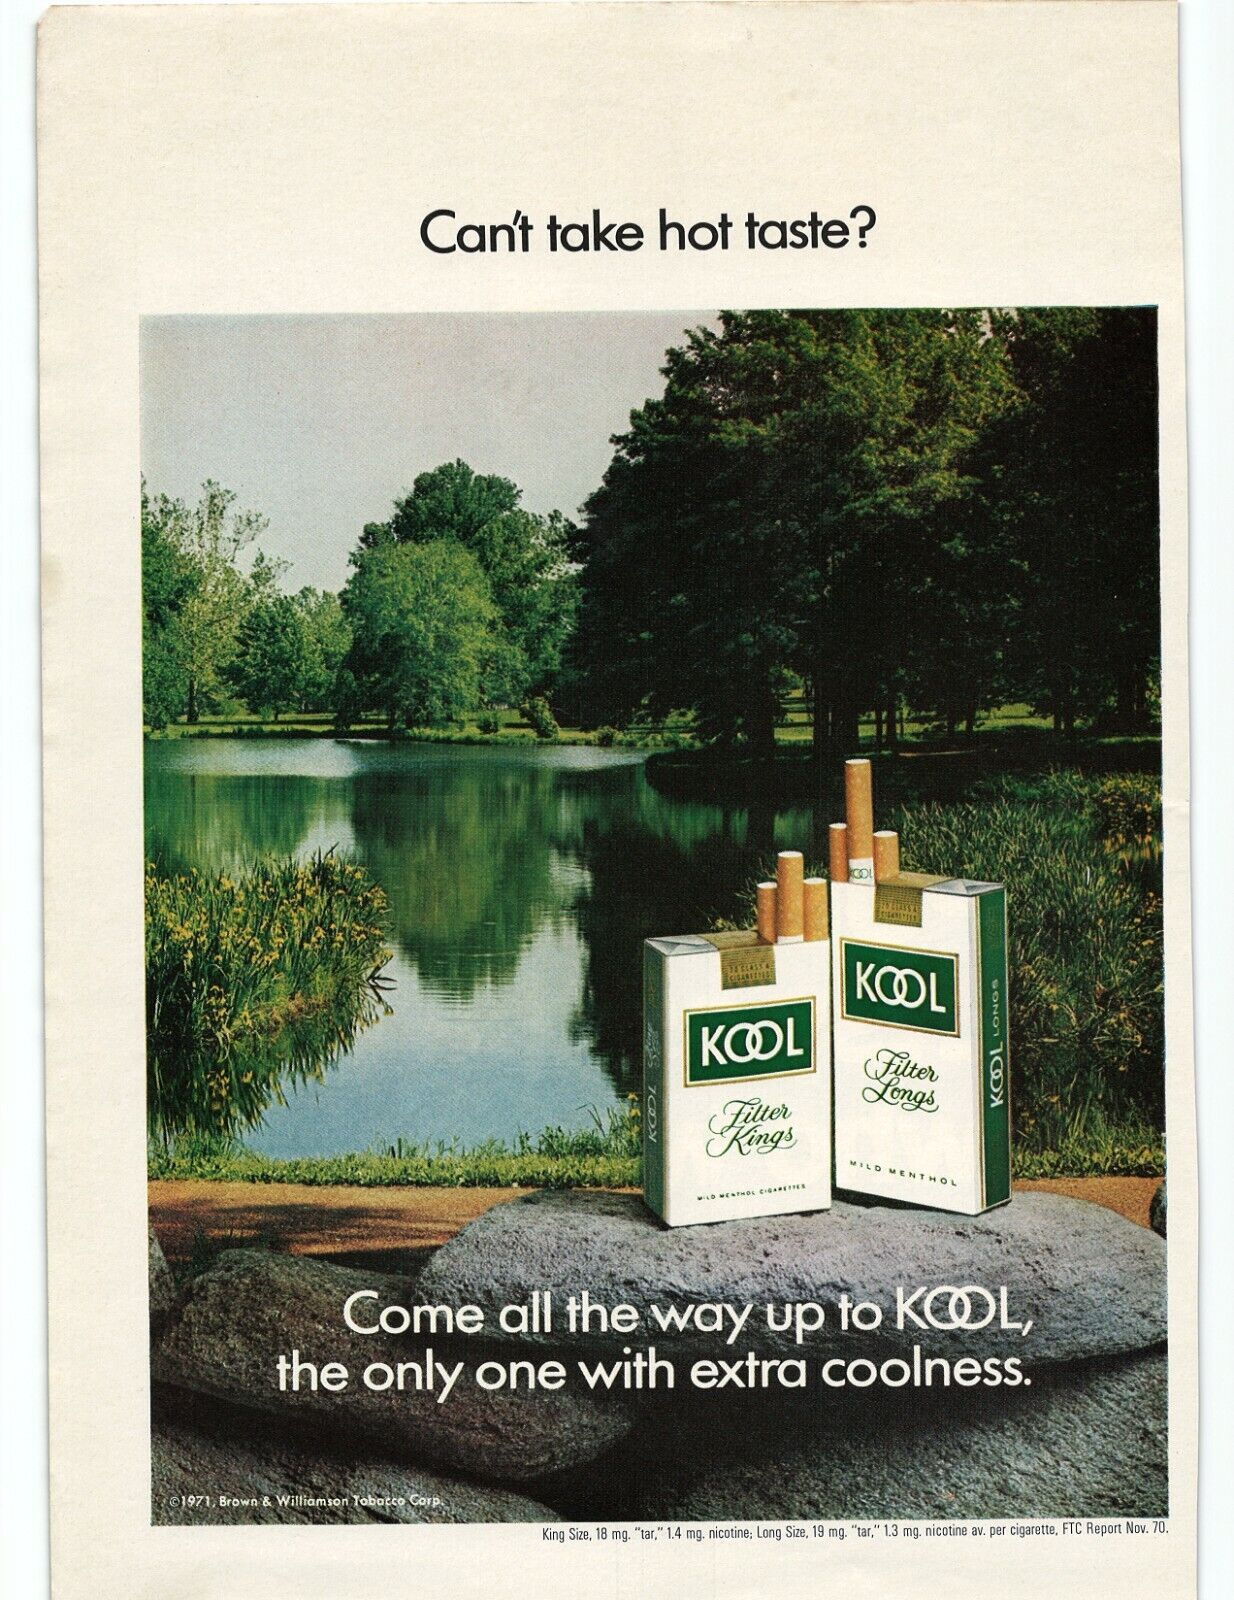 1971 Kool coolness cigarette print ad advertisement. CAN\'T TAKE HOT TASTE?